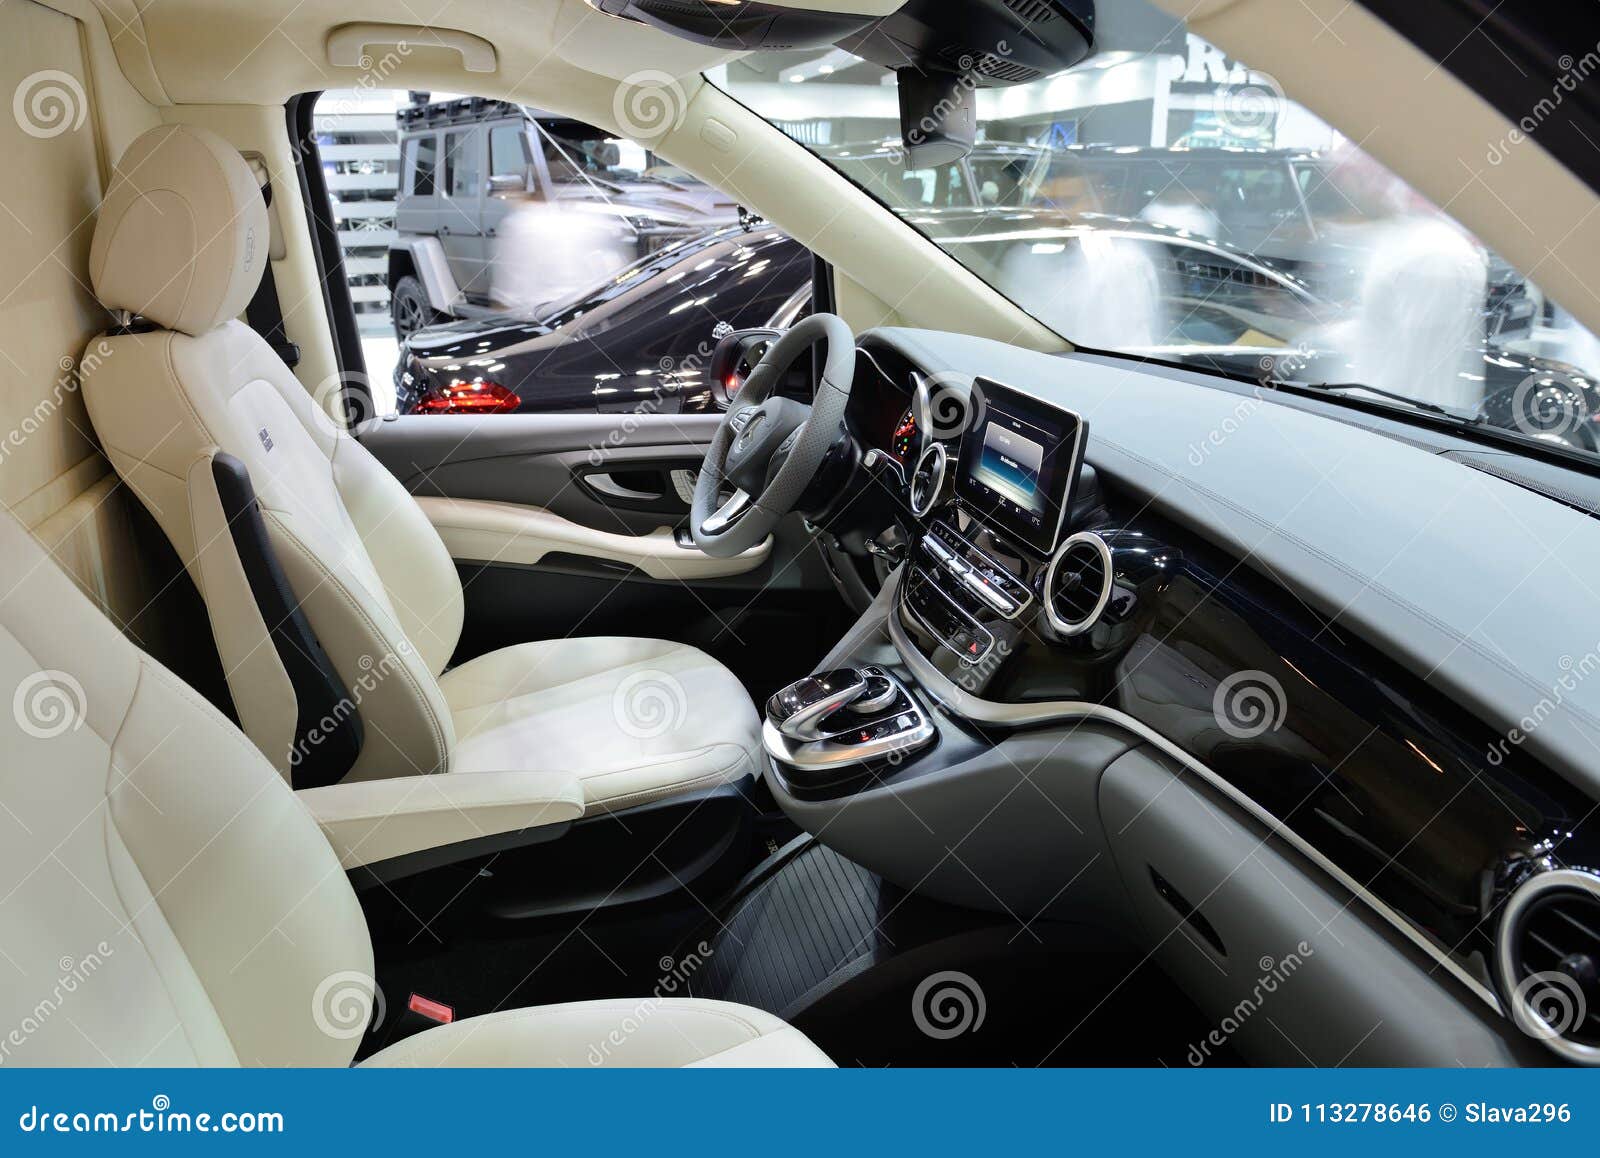 The Mercedes Benz Brabus V Class Van Interior Is On Dubai